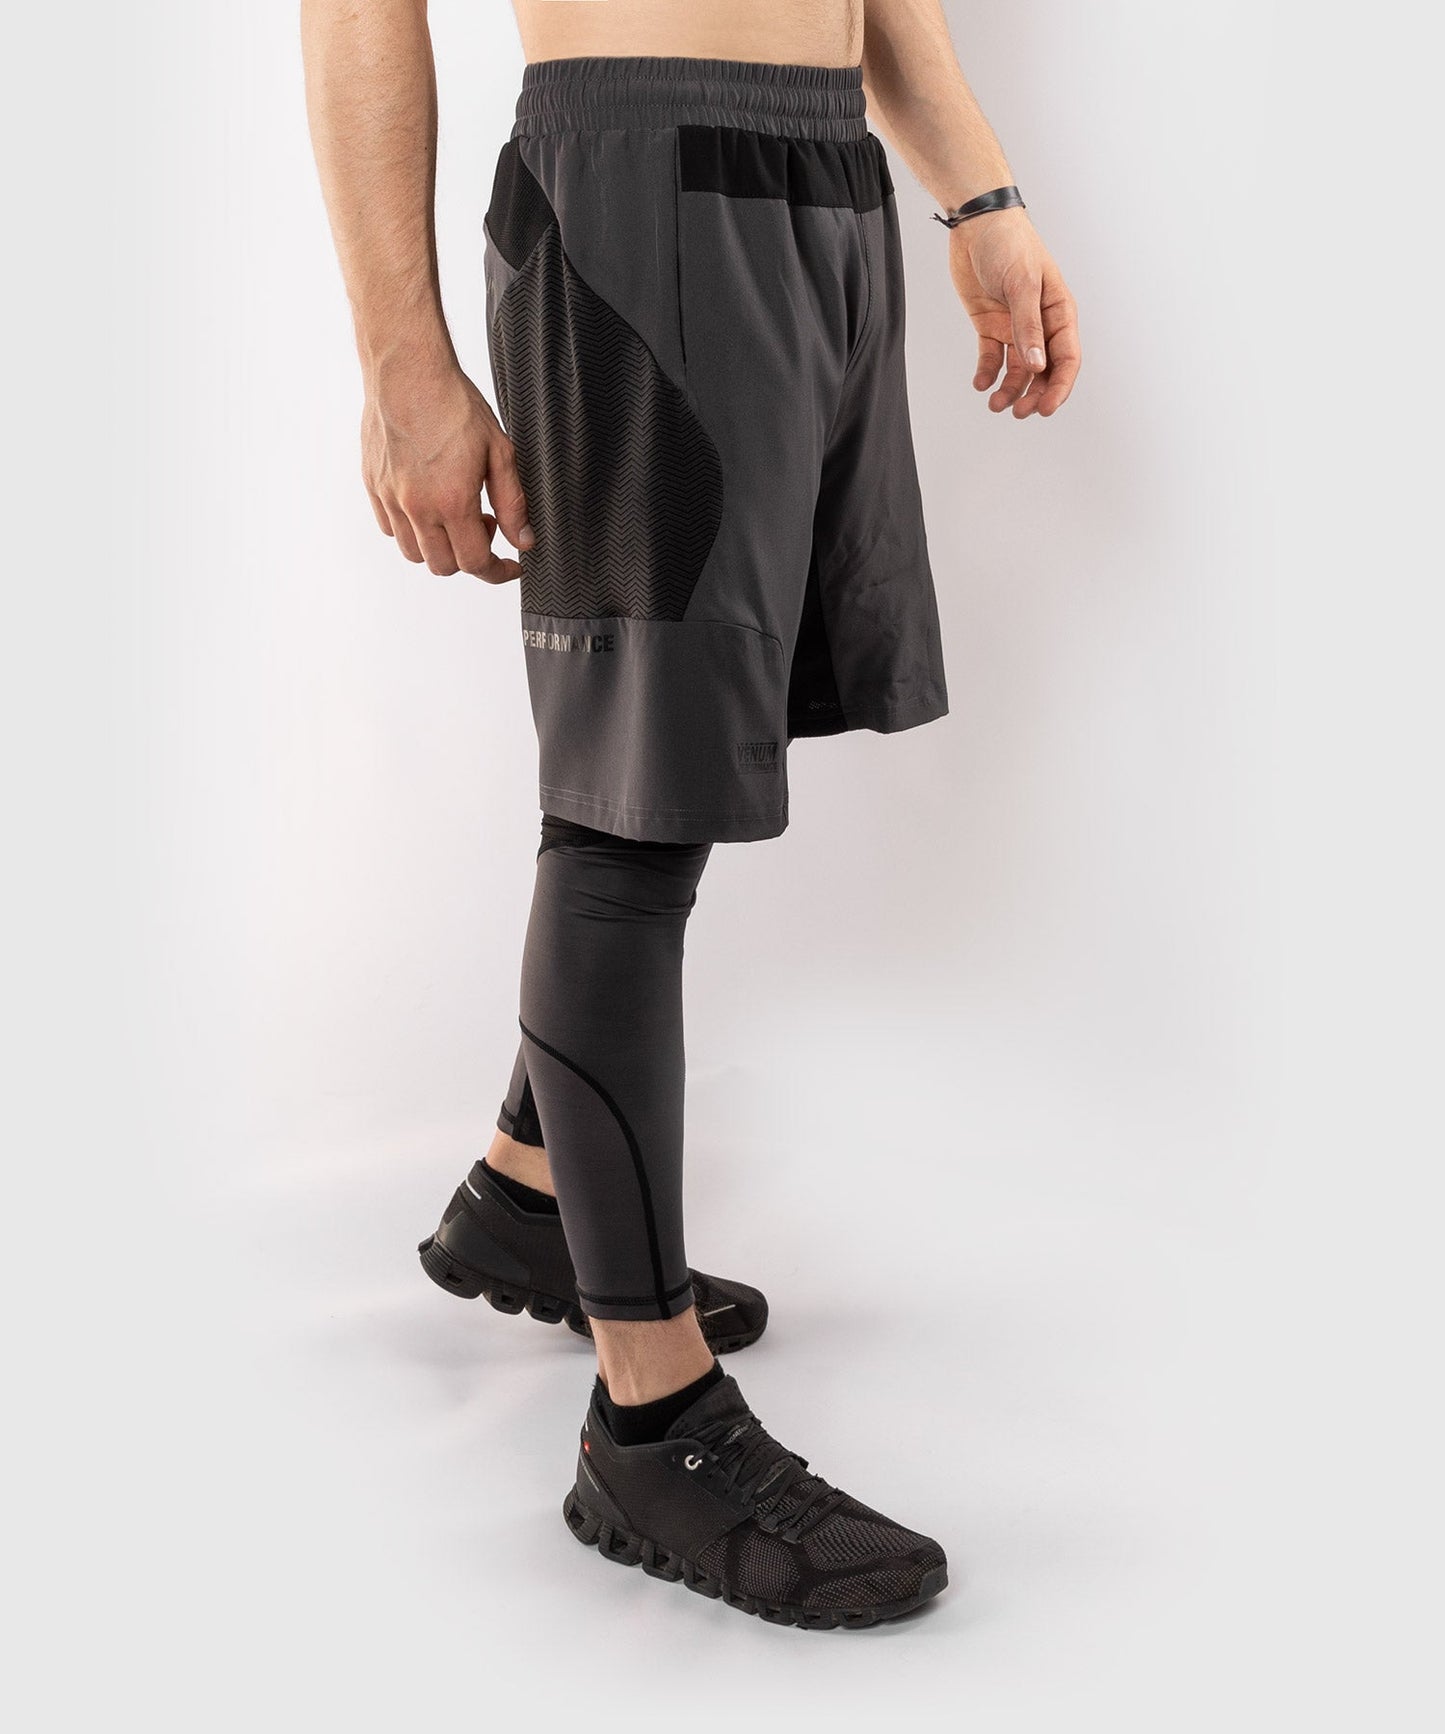 Venum G-Fit Training Shorts - Grey/Black